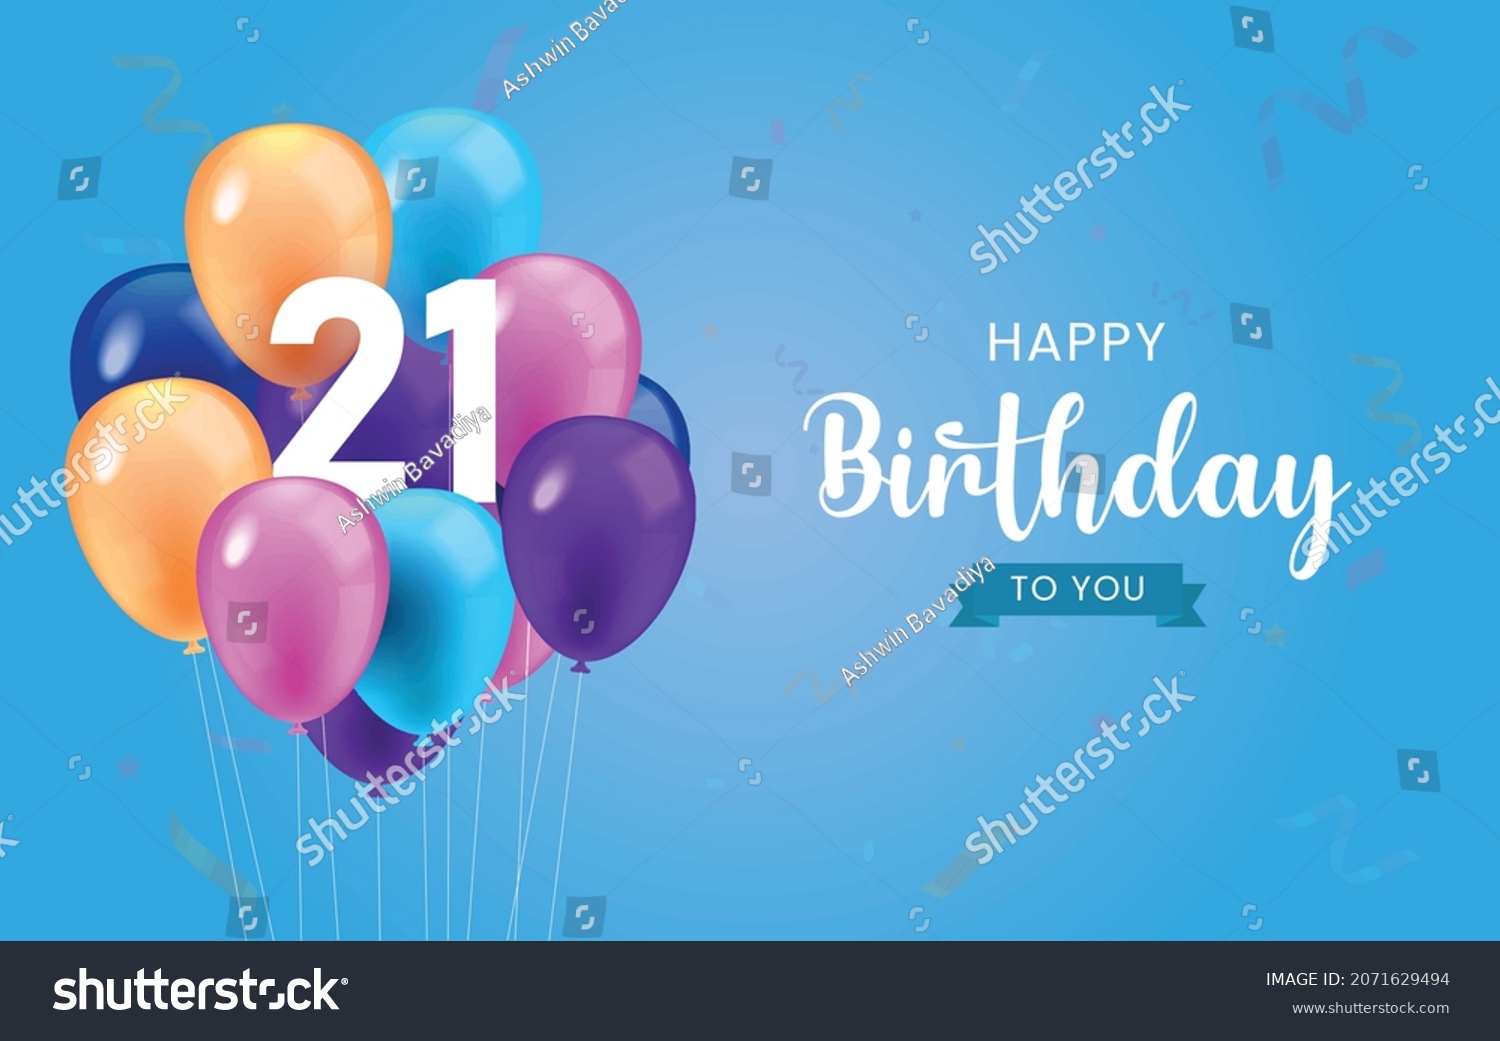 SVG of Happy 21st birthday, Greeting card, Vector illustration design.
 svg